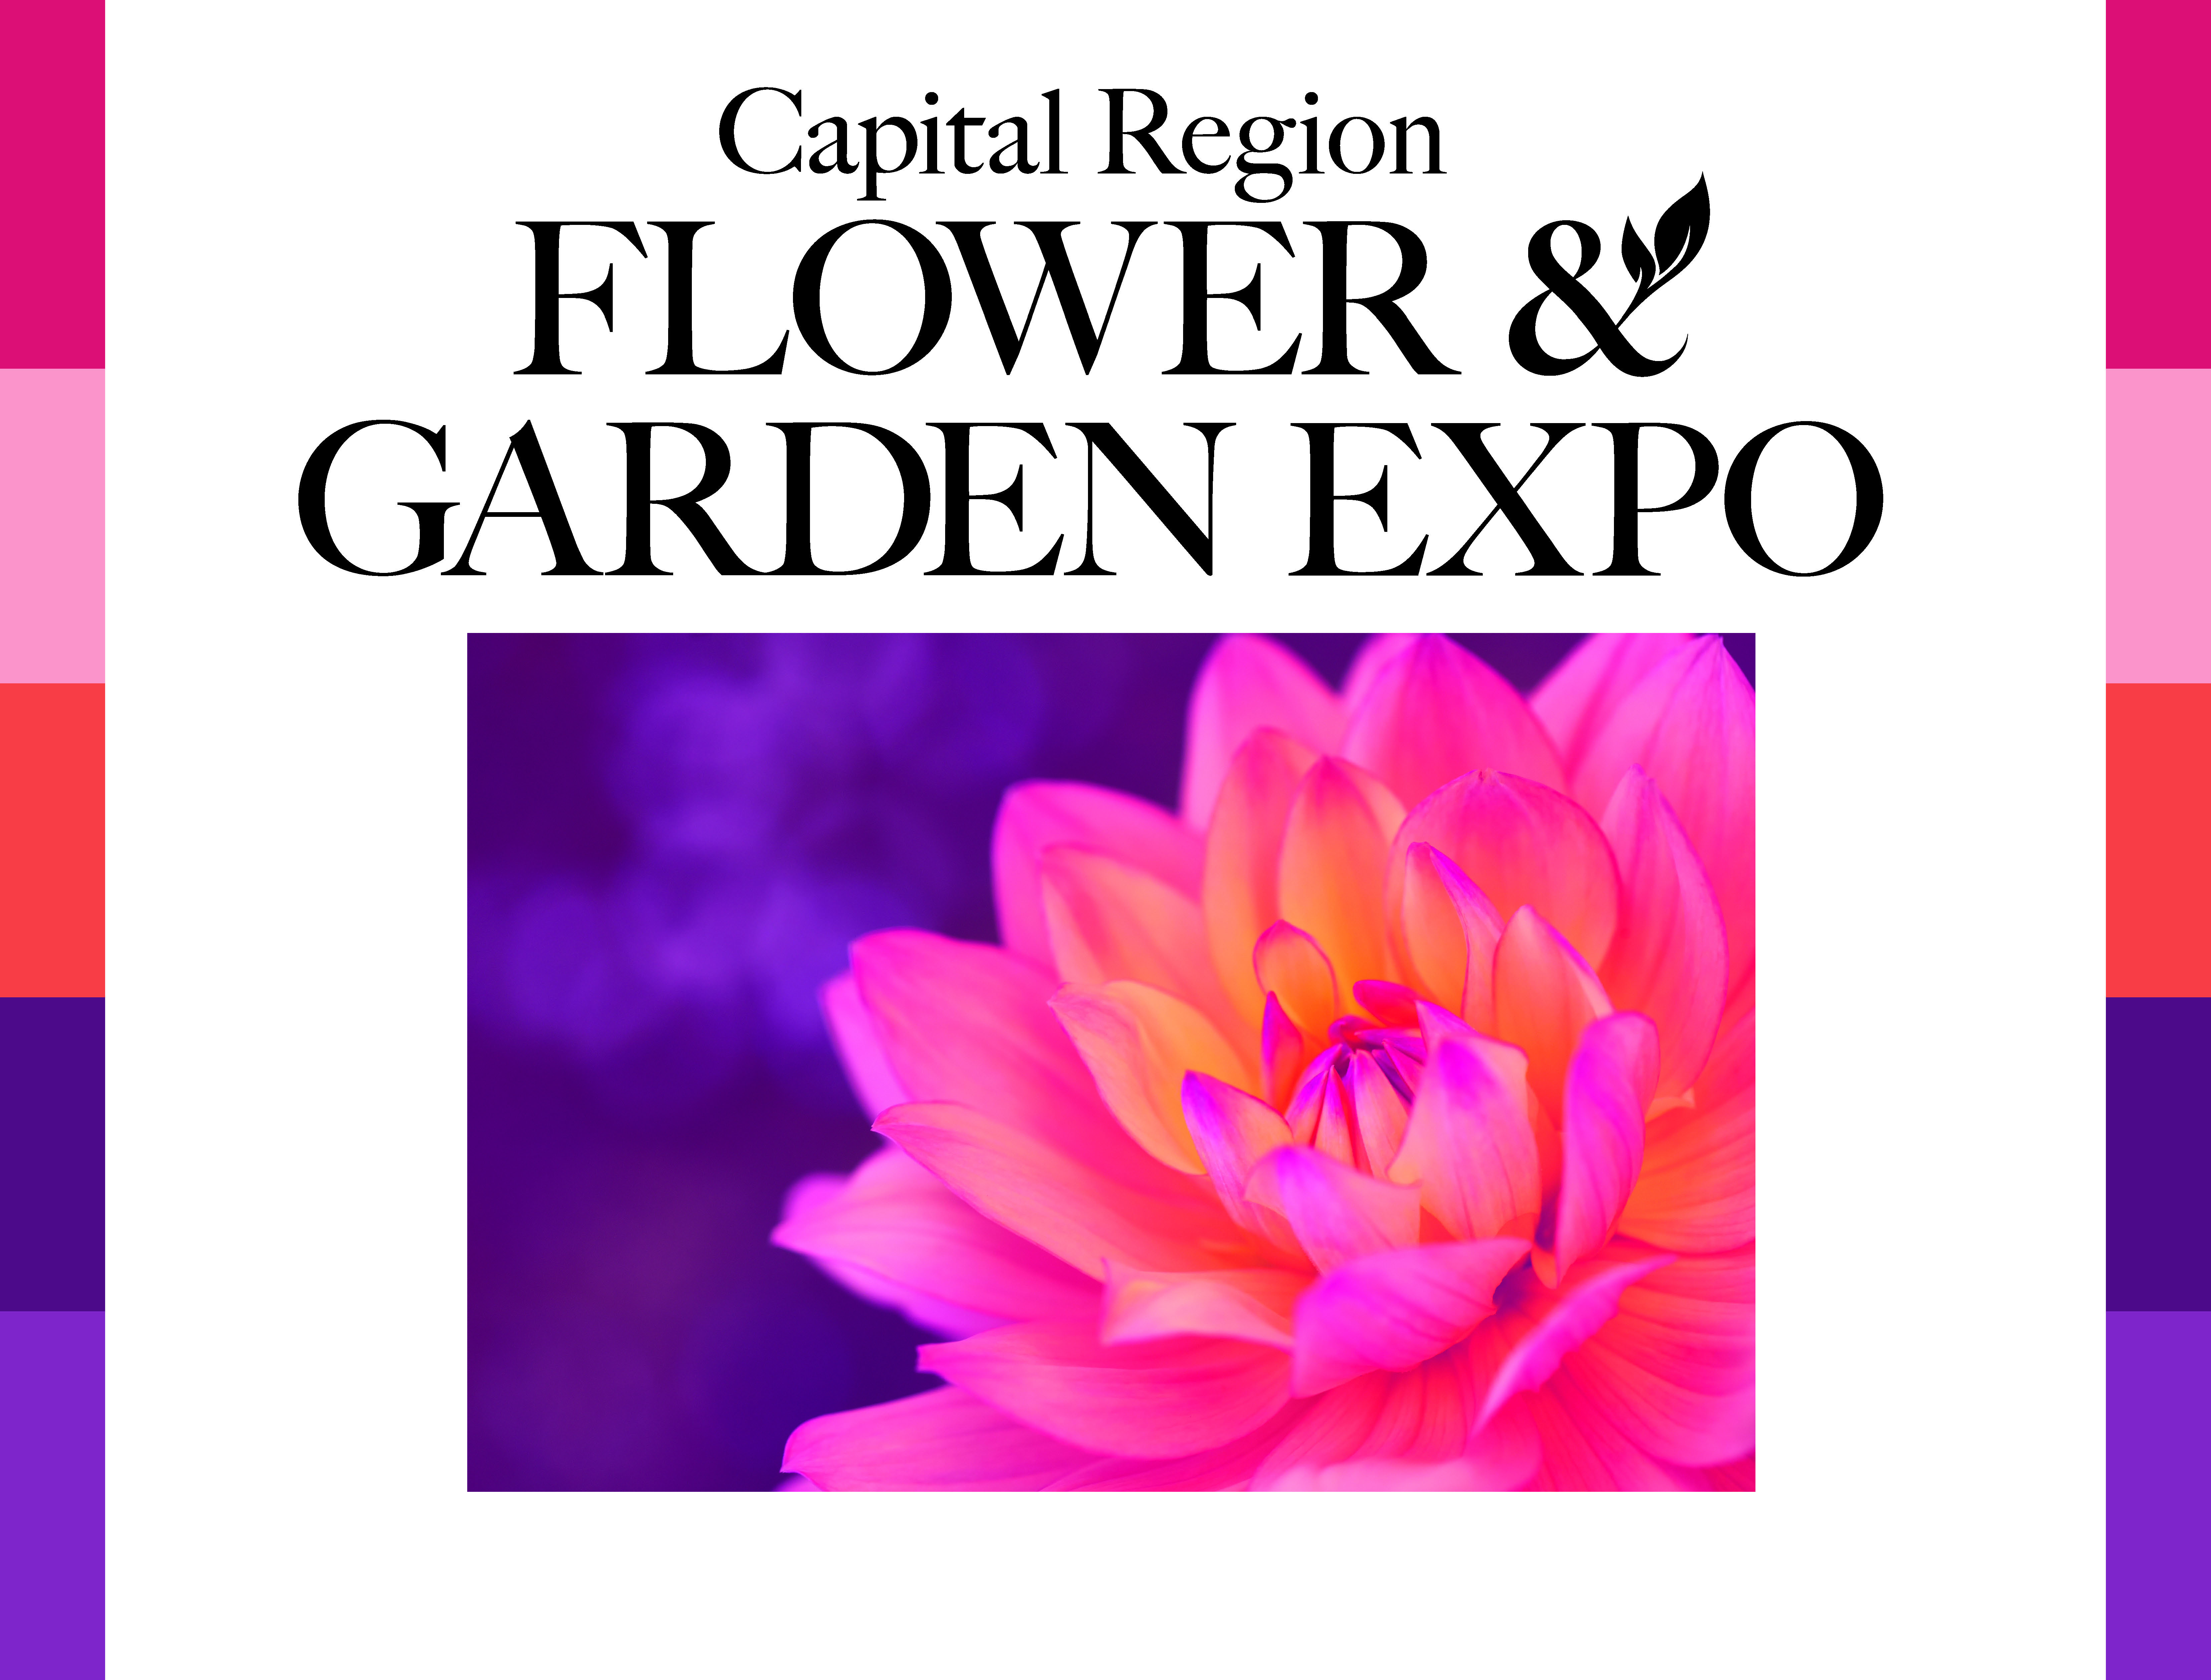 Capital Region Flower & Garden Expo